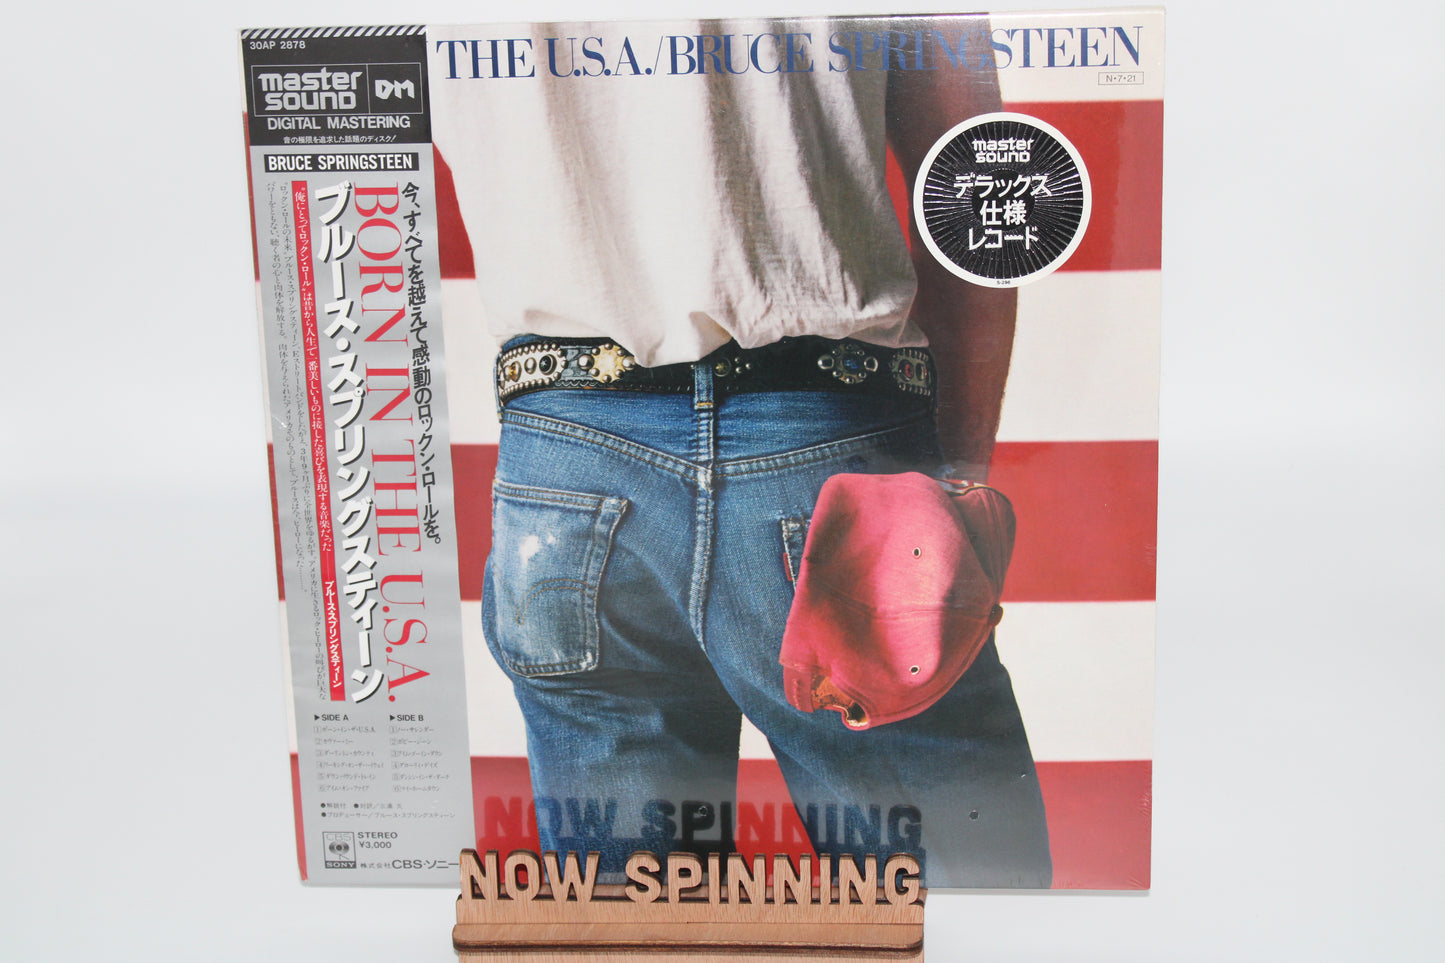 Bruce Springsteen SEALED/JAPAN Born in the USA 1984 Vinyl - Japan Master Sound Import 1984